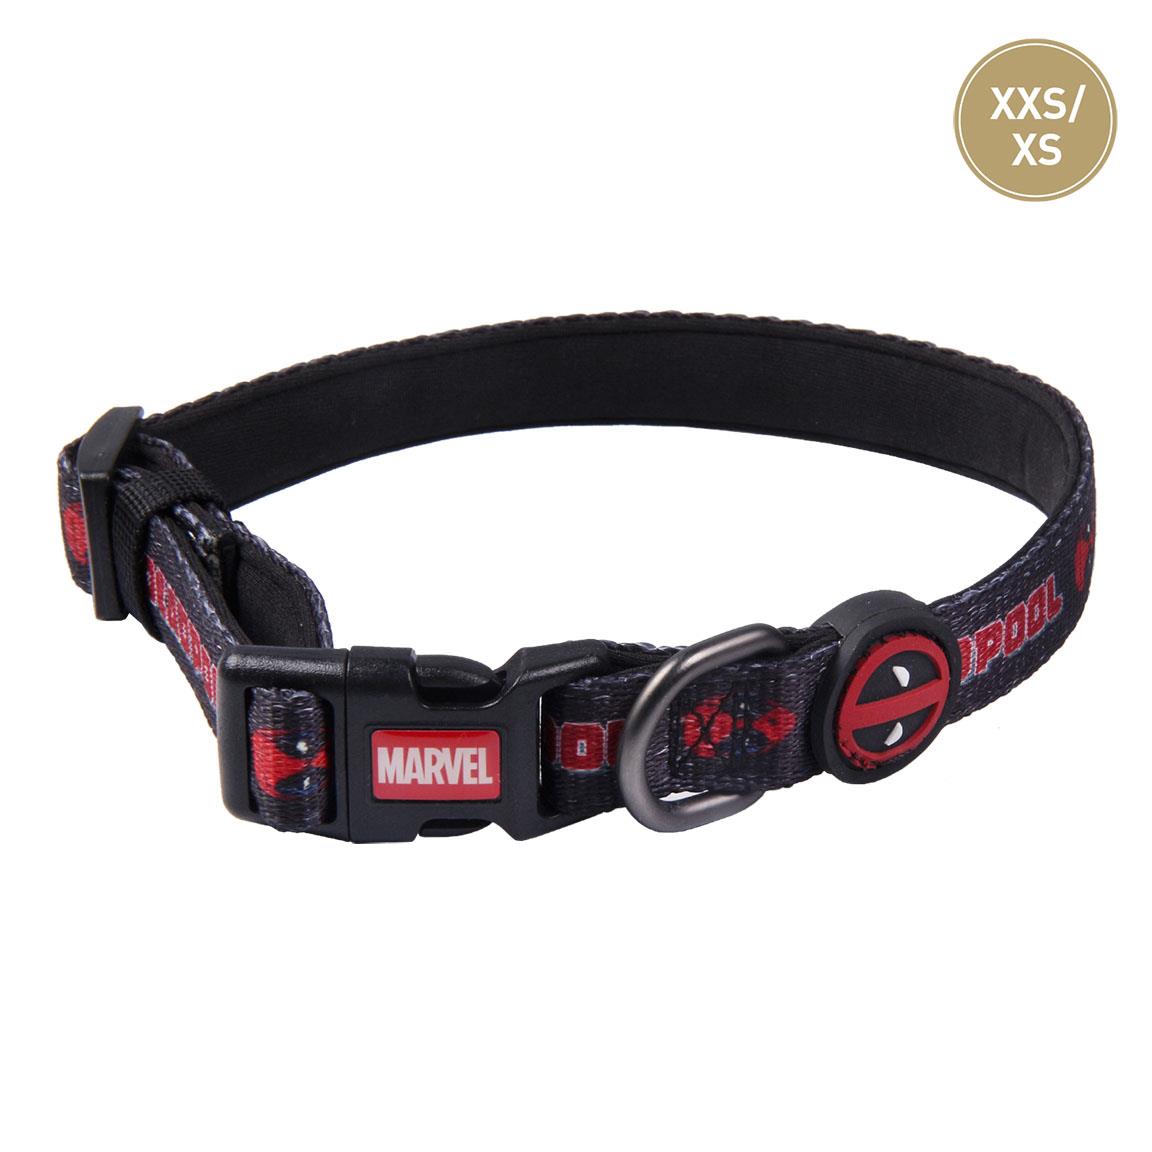 Deadpool Dog Collar Premium Xxs/Xs